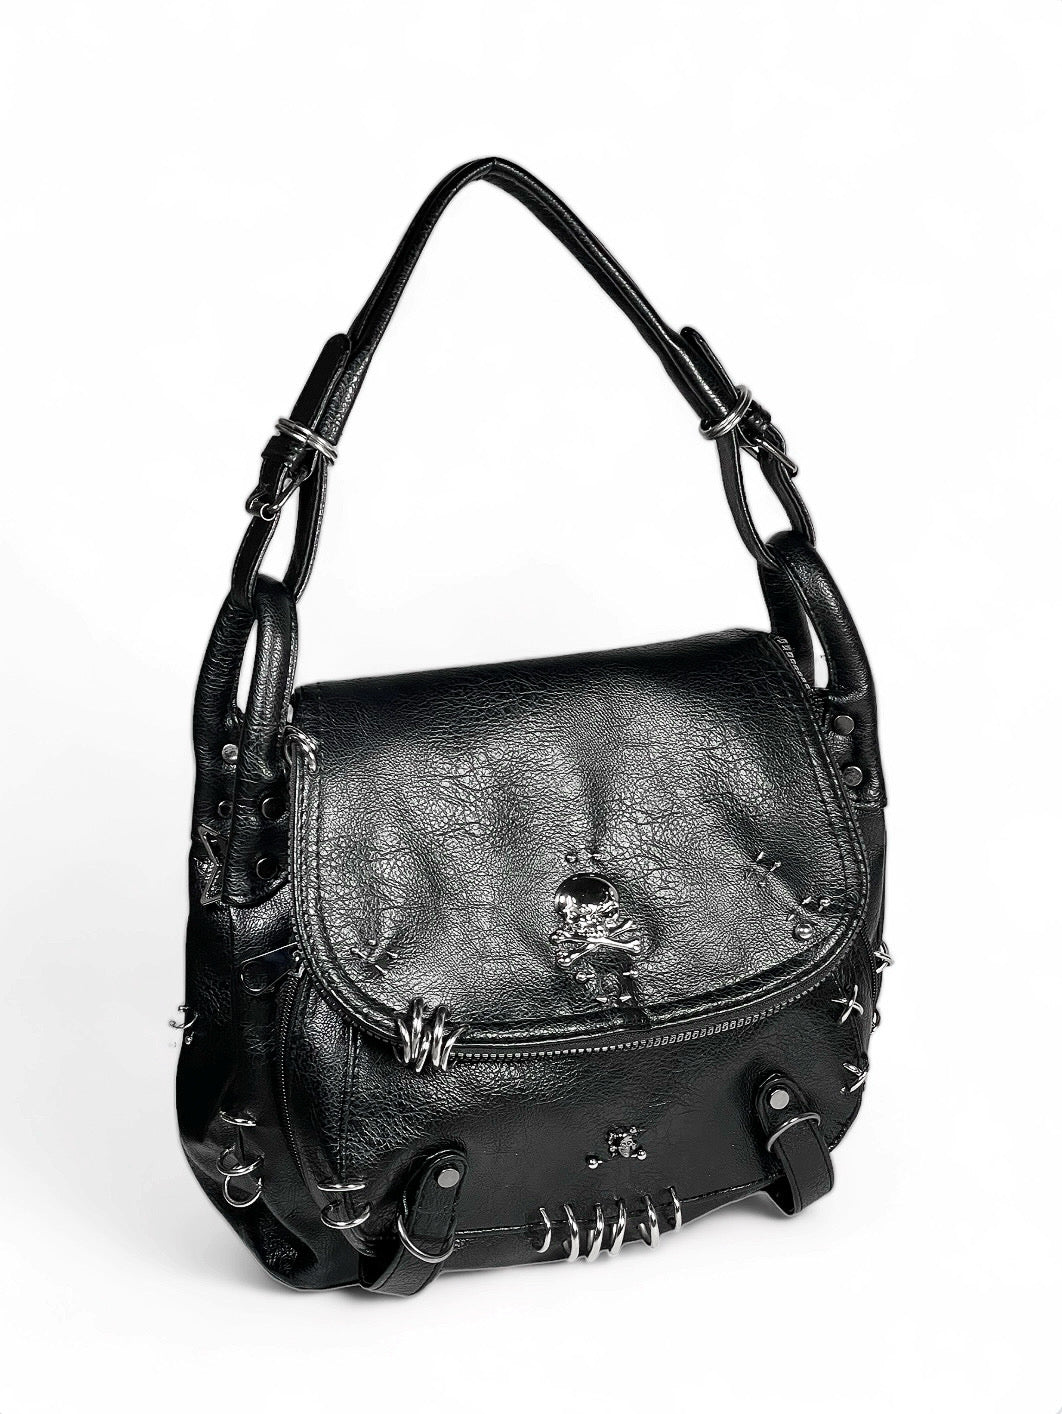 Black gothic hobo bag